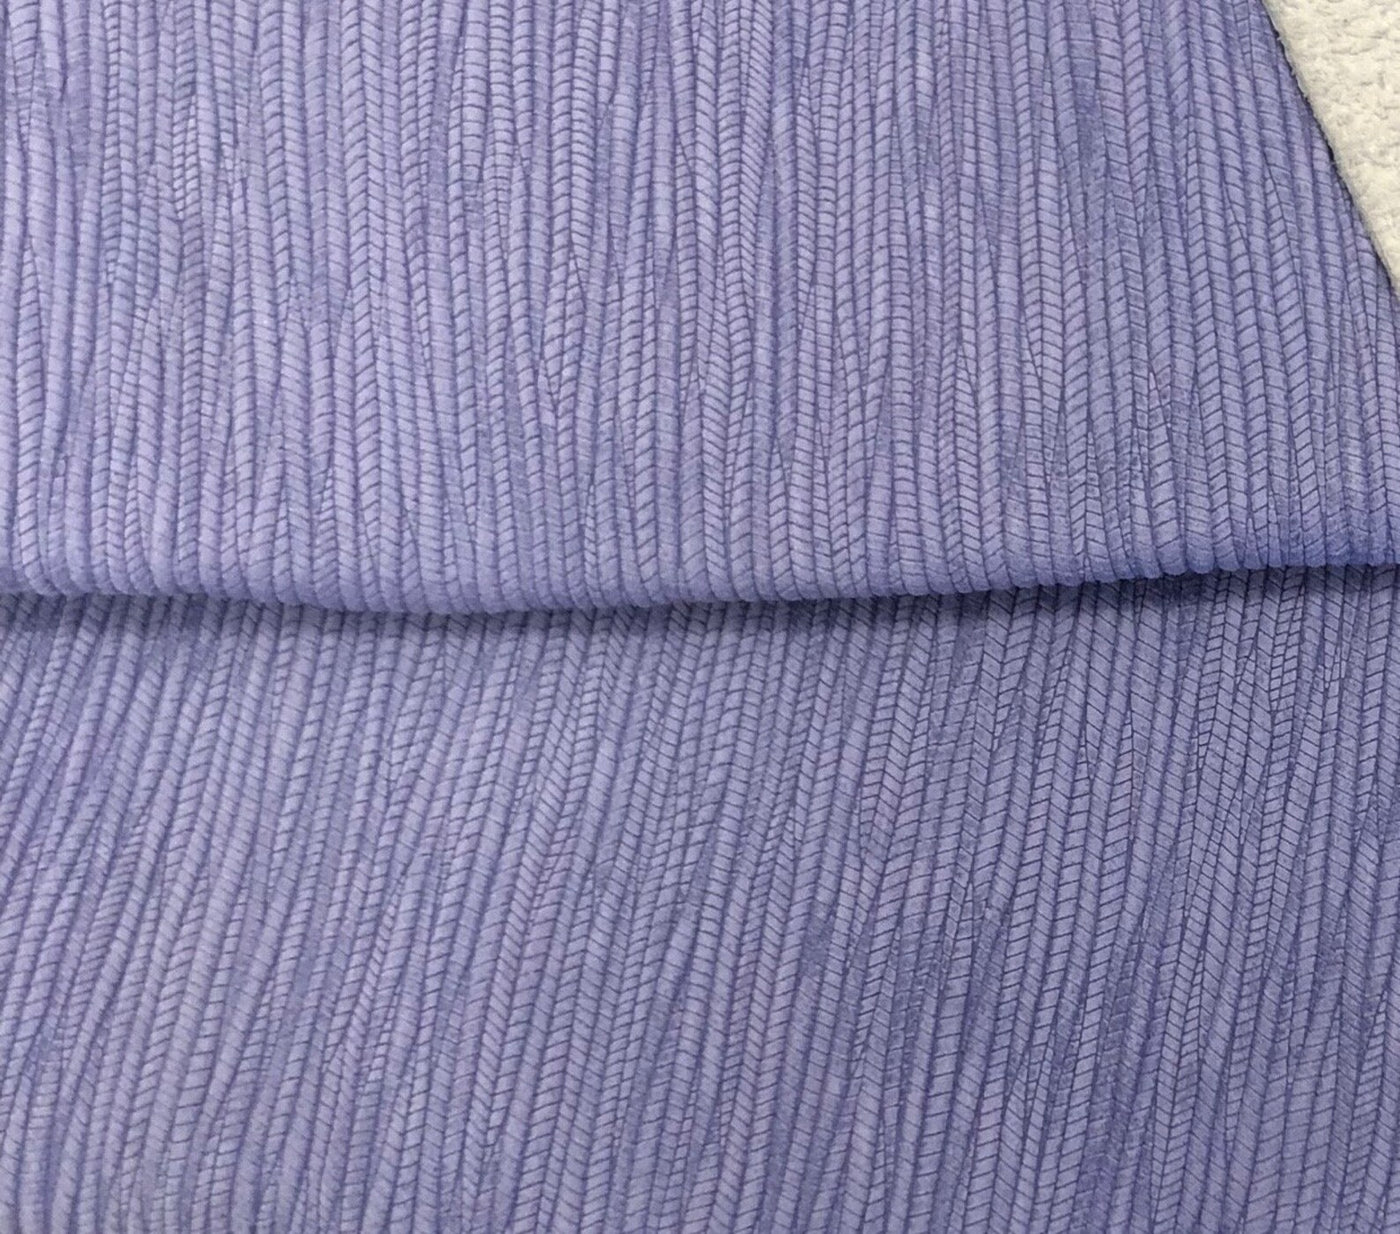 Periwinkle Purple Palm Leaf Genuine Leather Sheet for Earrings